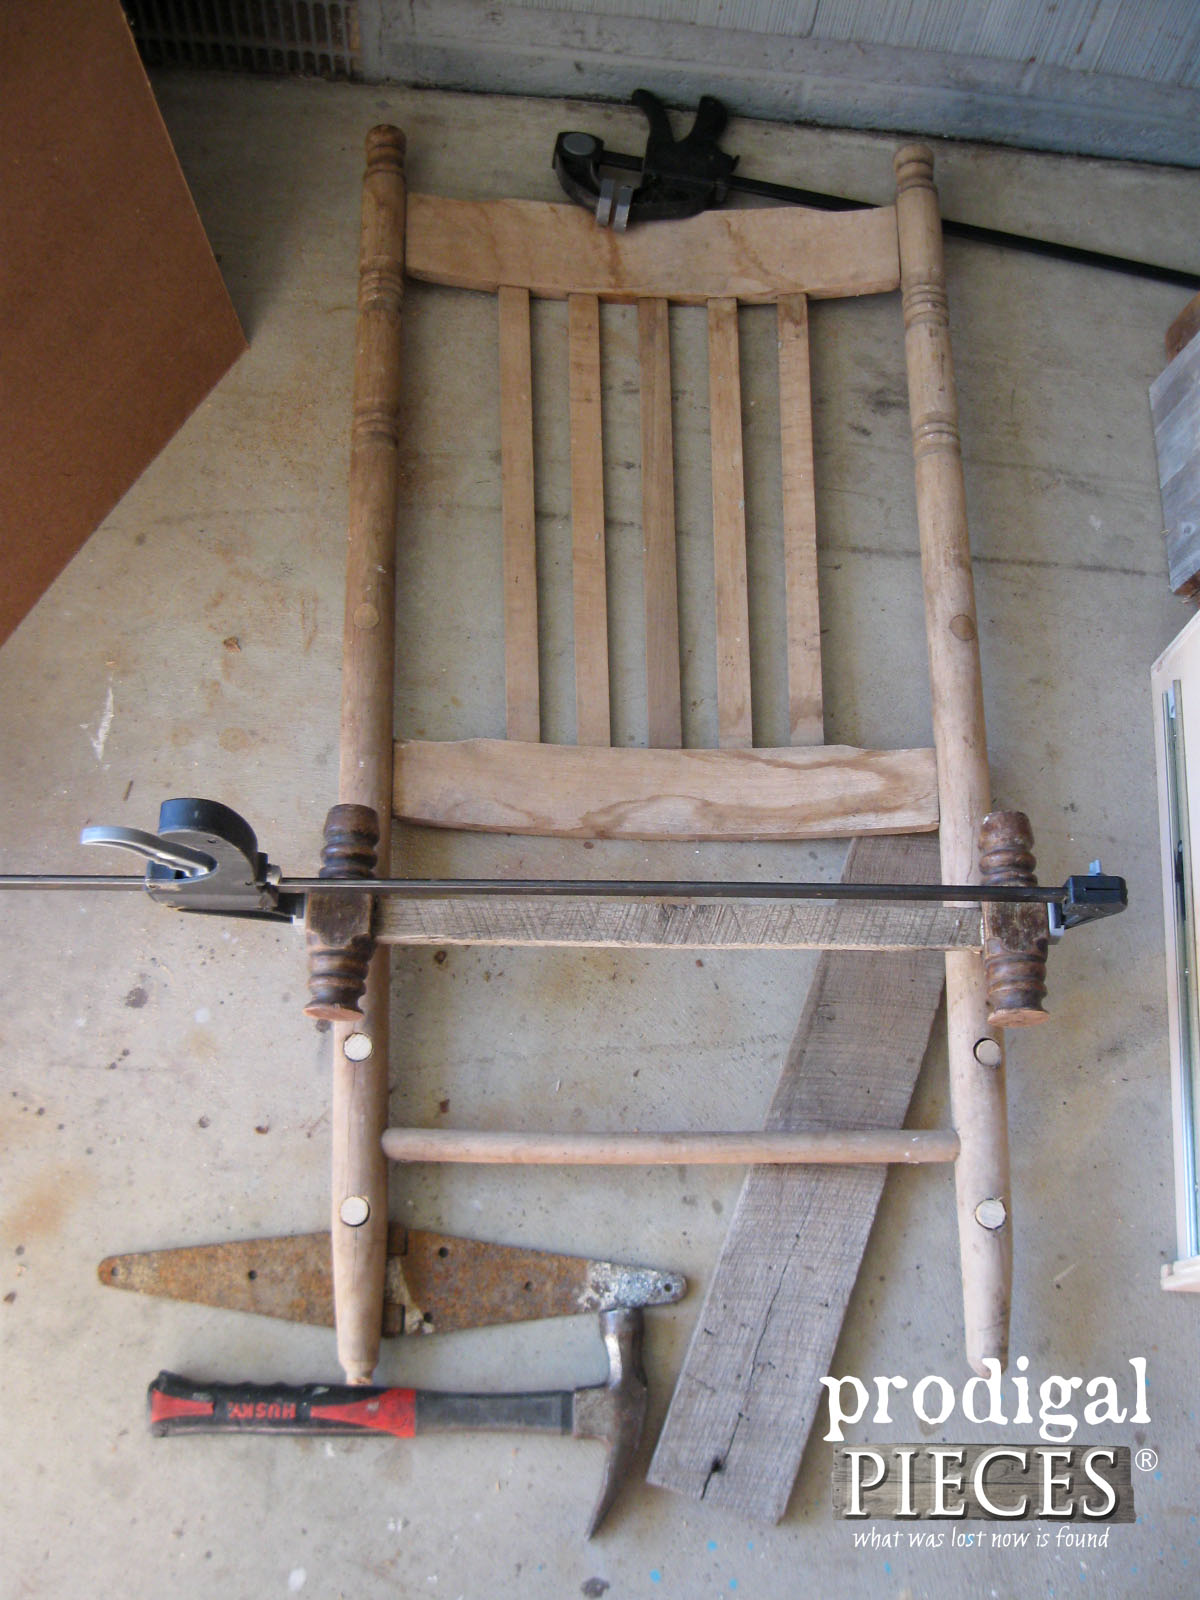 Repairing Broken Rocking Chair for New Life as Shelf | Prodigal Pieces | www.prodigalpieces.com